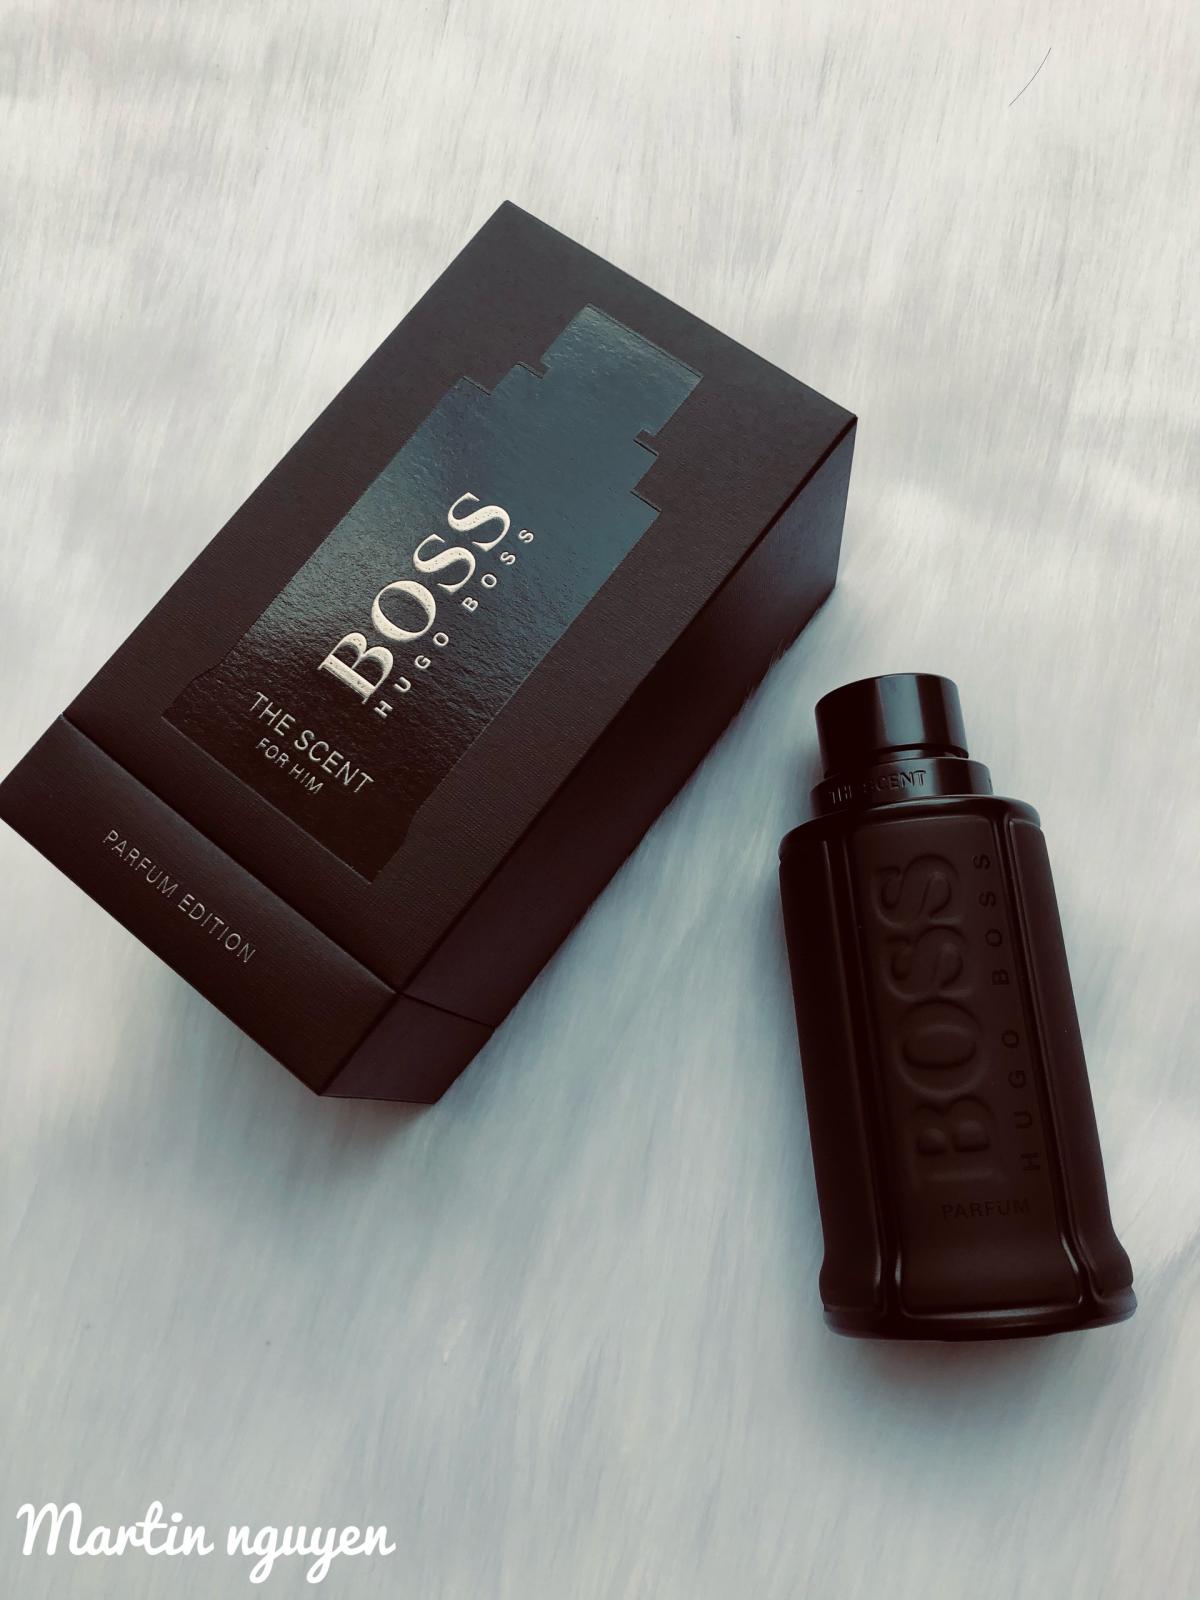 Boss The Scent Parfum Edition Hugo Boss cologne - a fragrance for men 2017